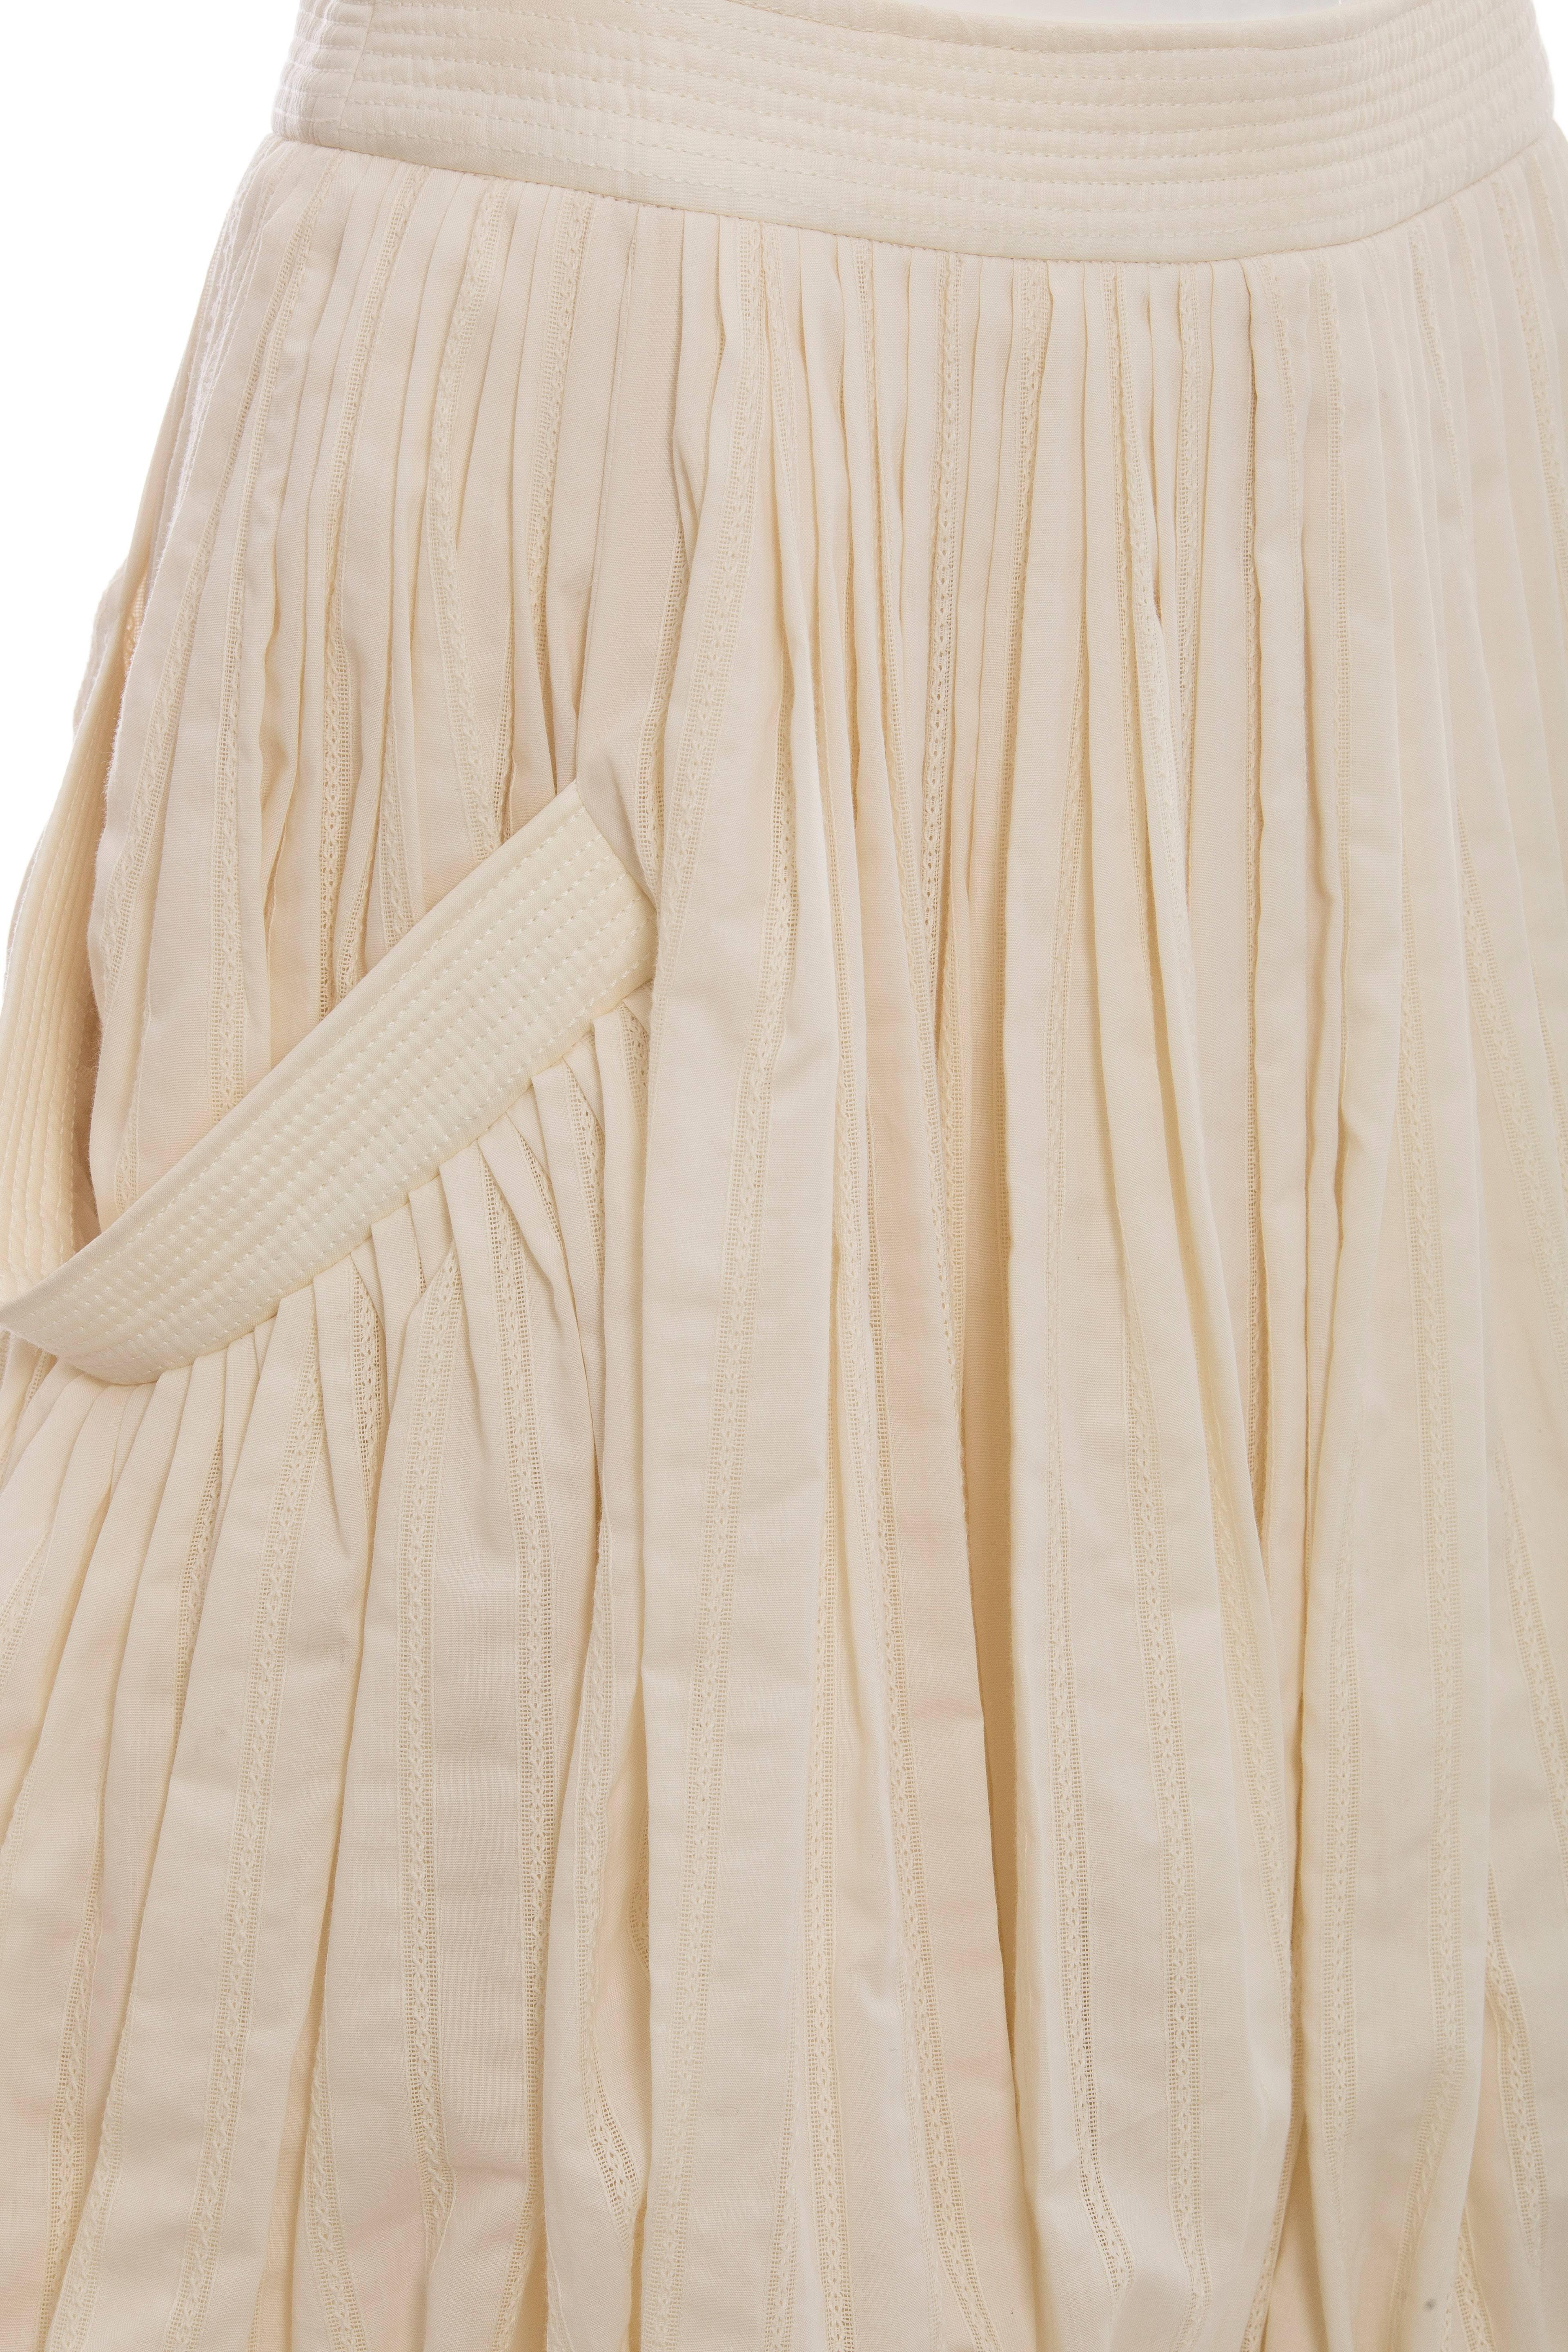 Alexander McQueen Cream Pleated Cotton Skirt Two Deep Pockets, Spring 2006 2